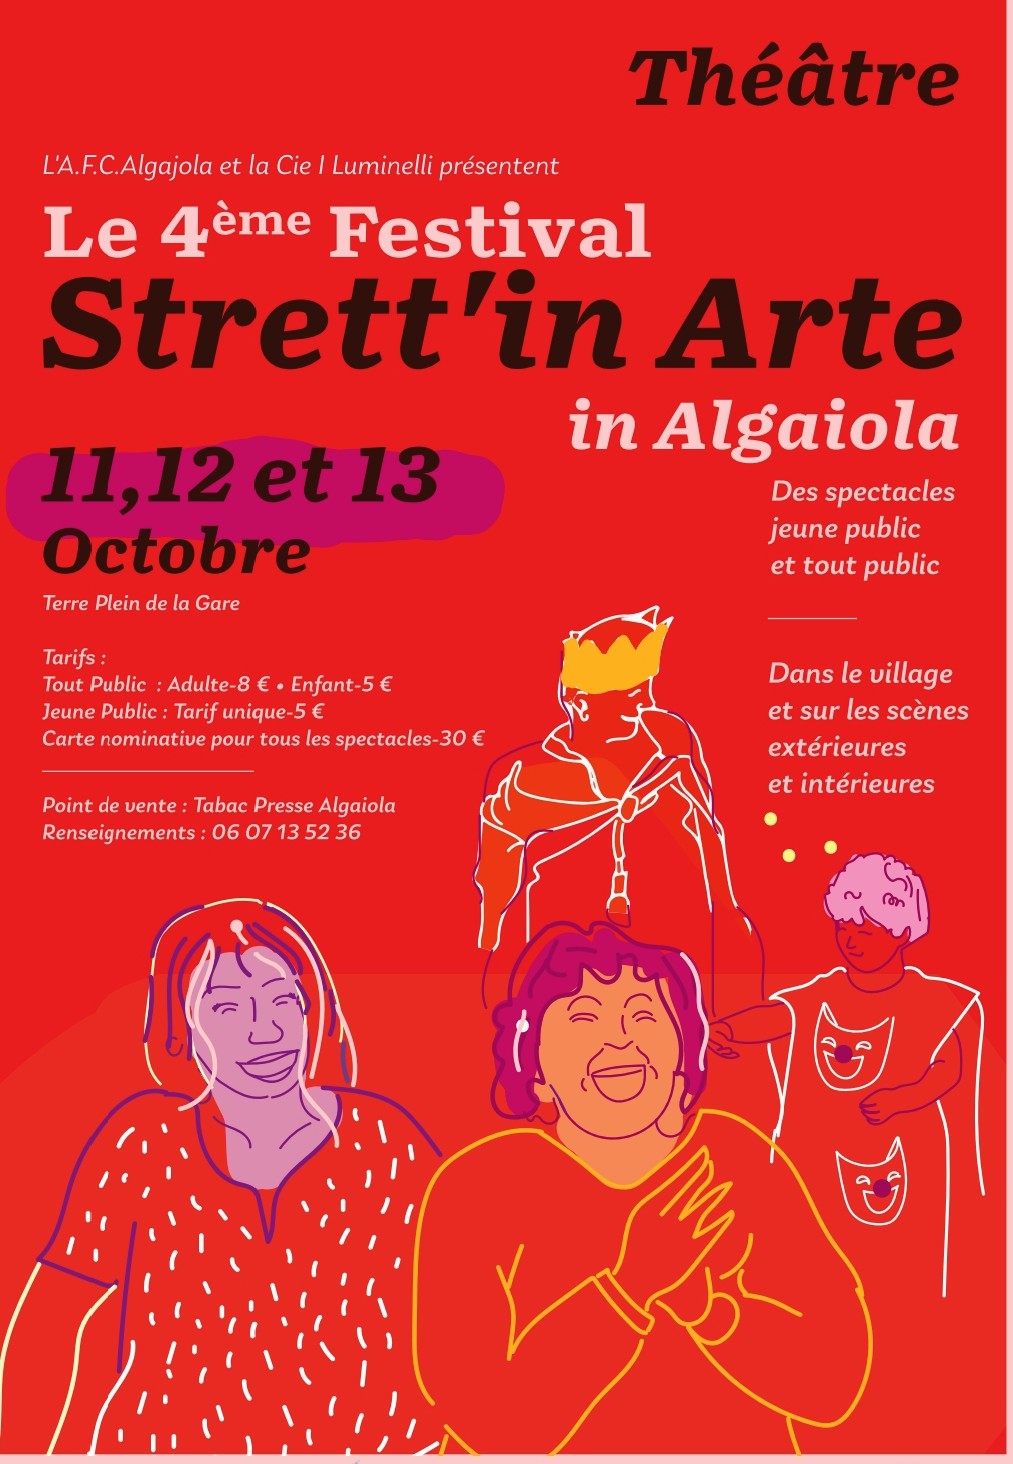 IVème festival de théâtre Strett'in Arte in Algaiola